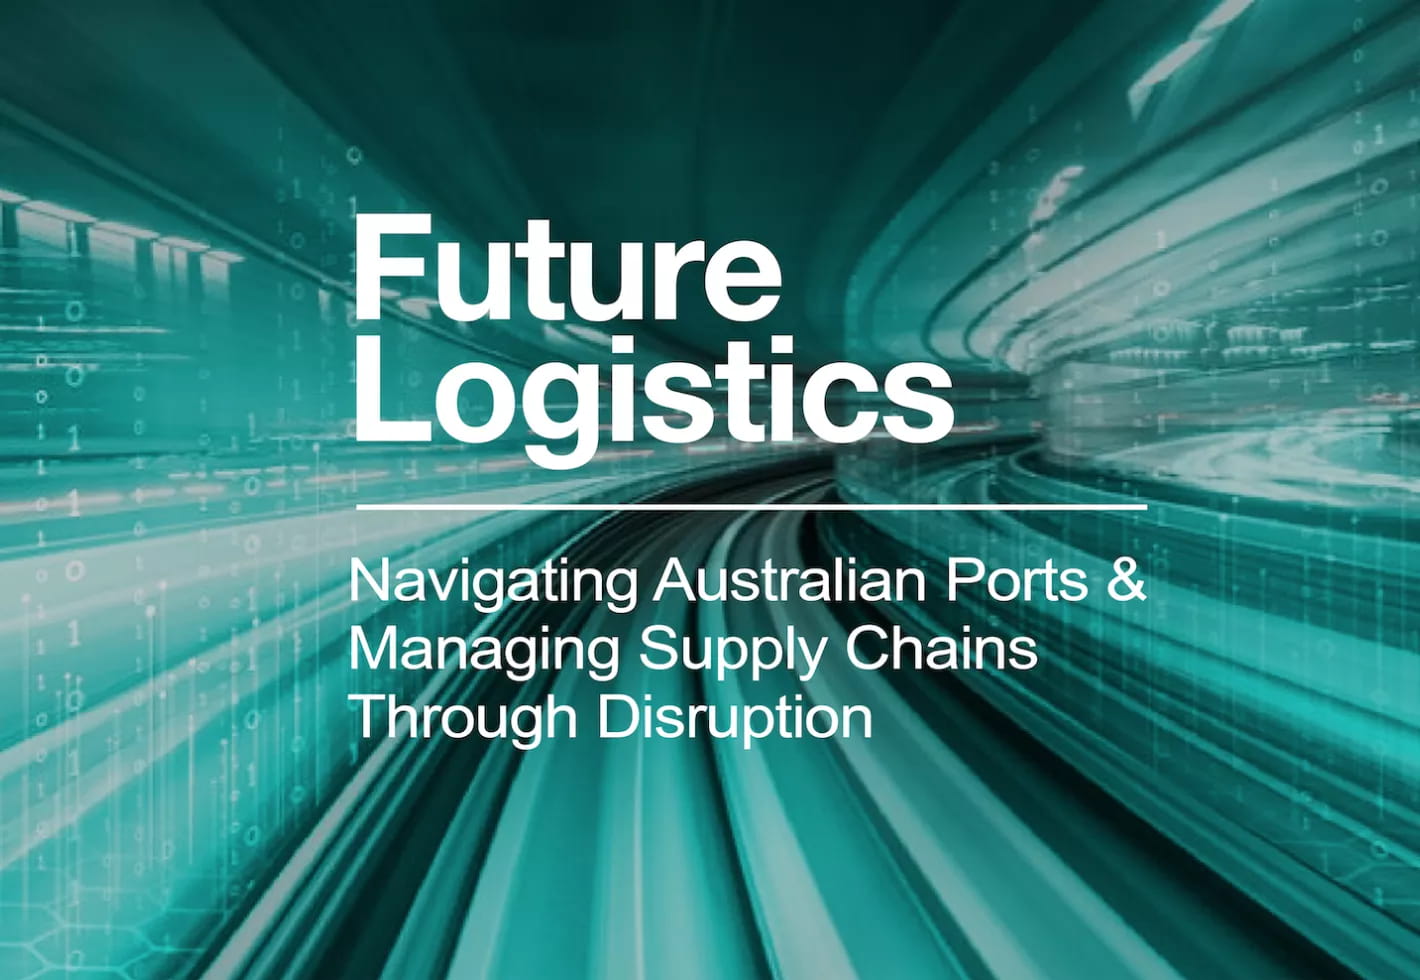 Navigating Australian Ports & Managing Supply Chains through Disruption